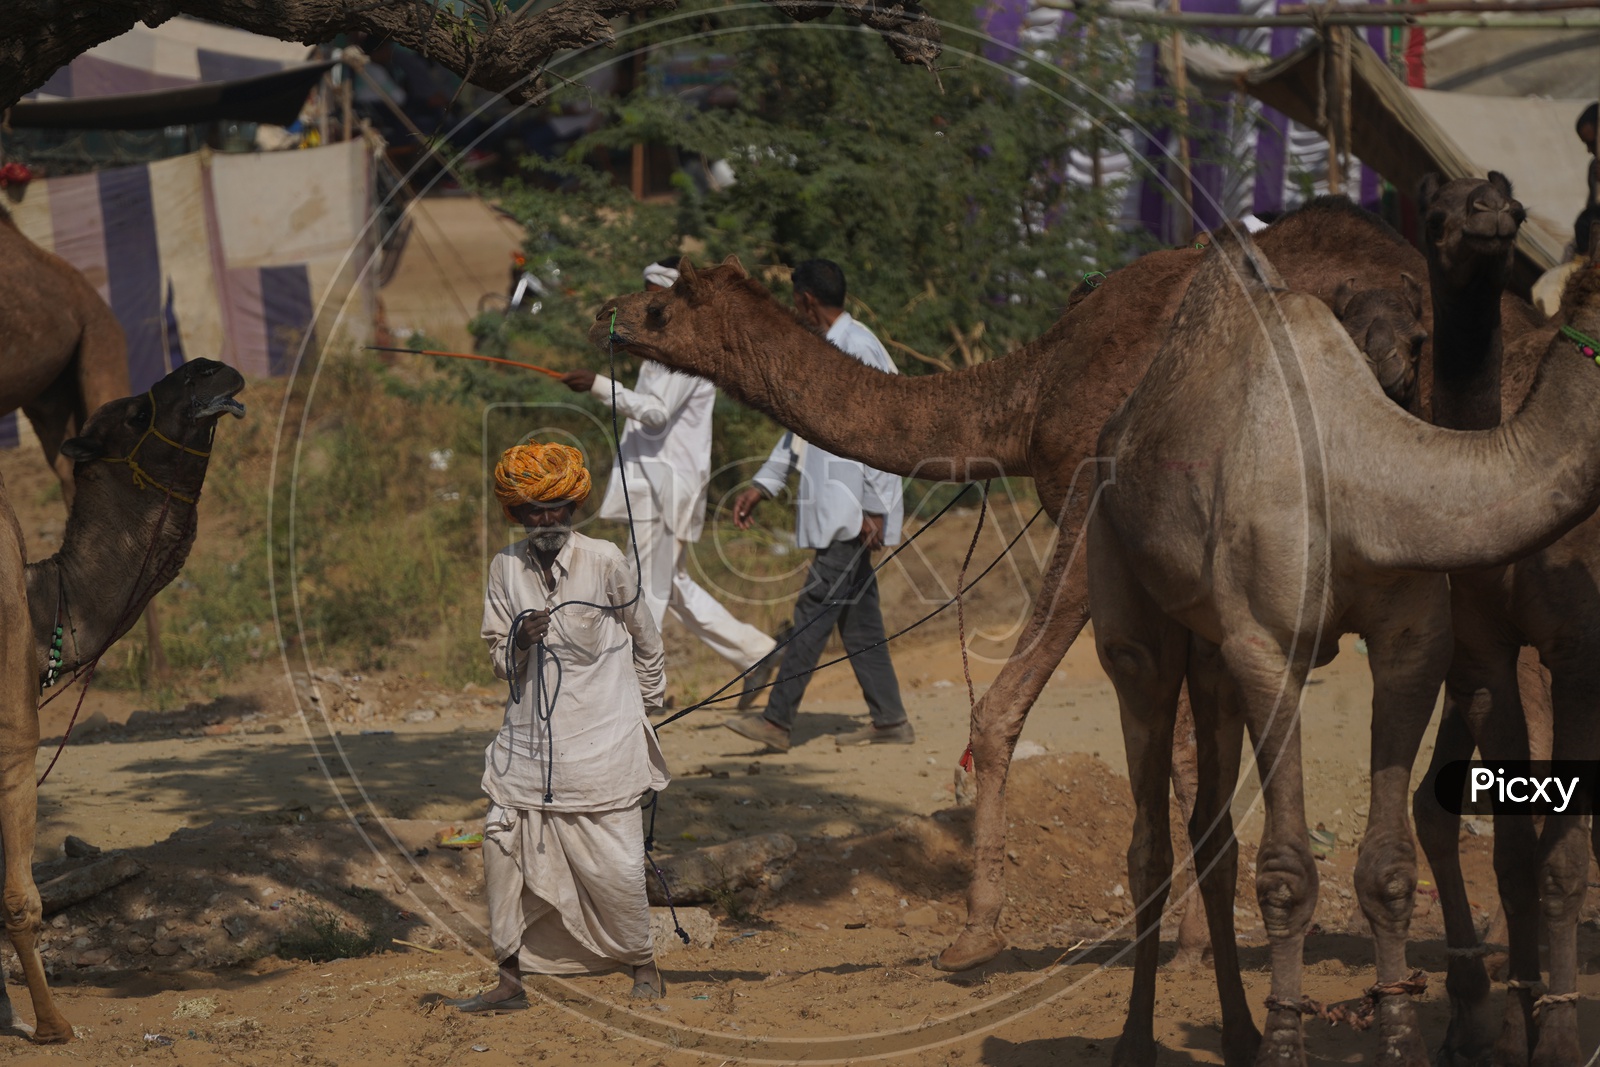 An Old Man With  His Camel  in Pushkar Camel fair